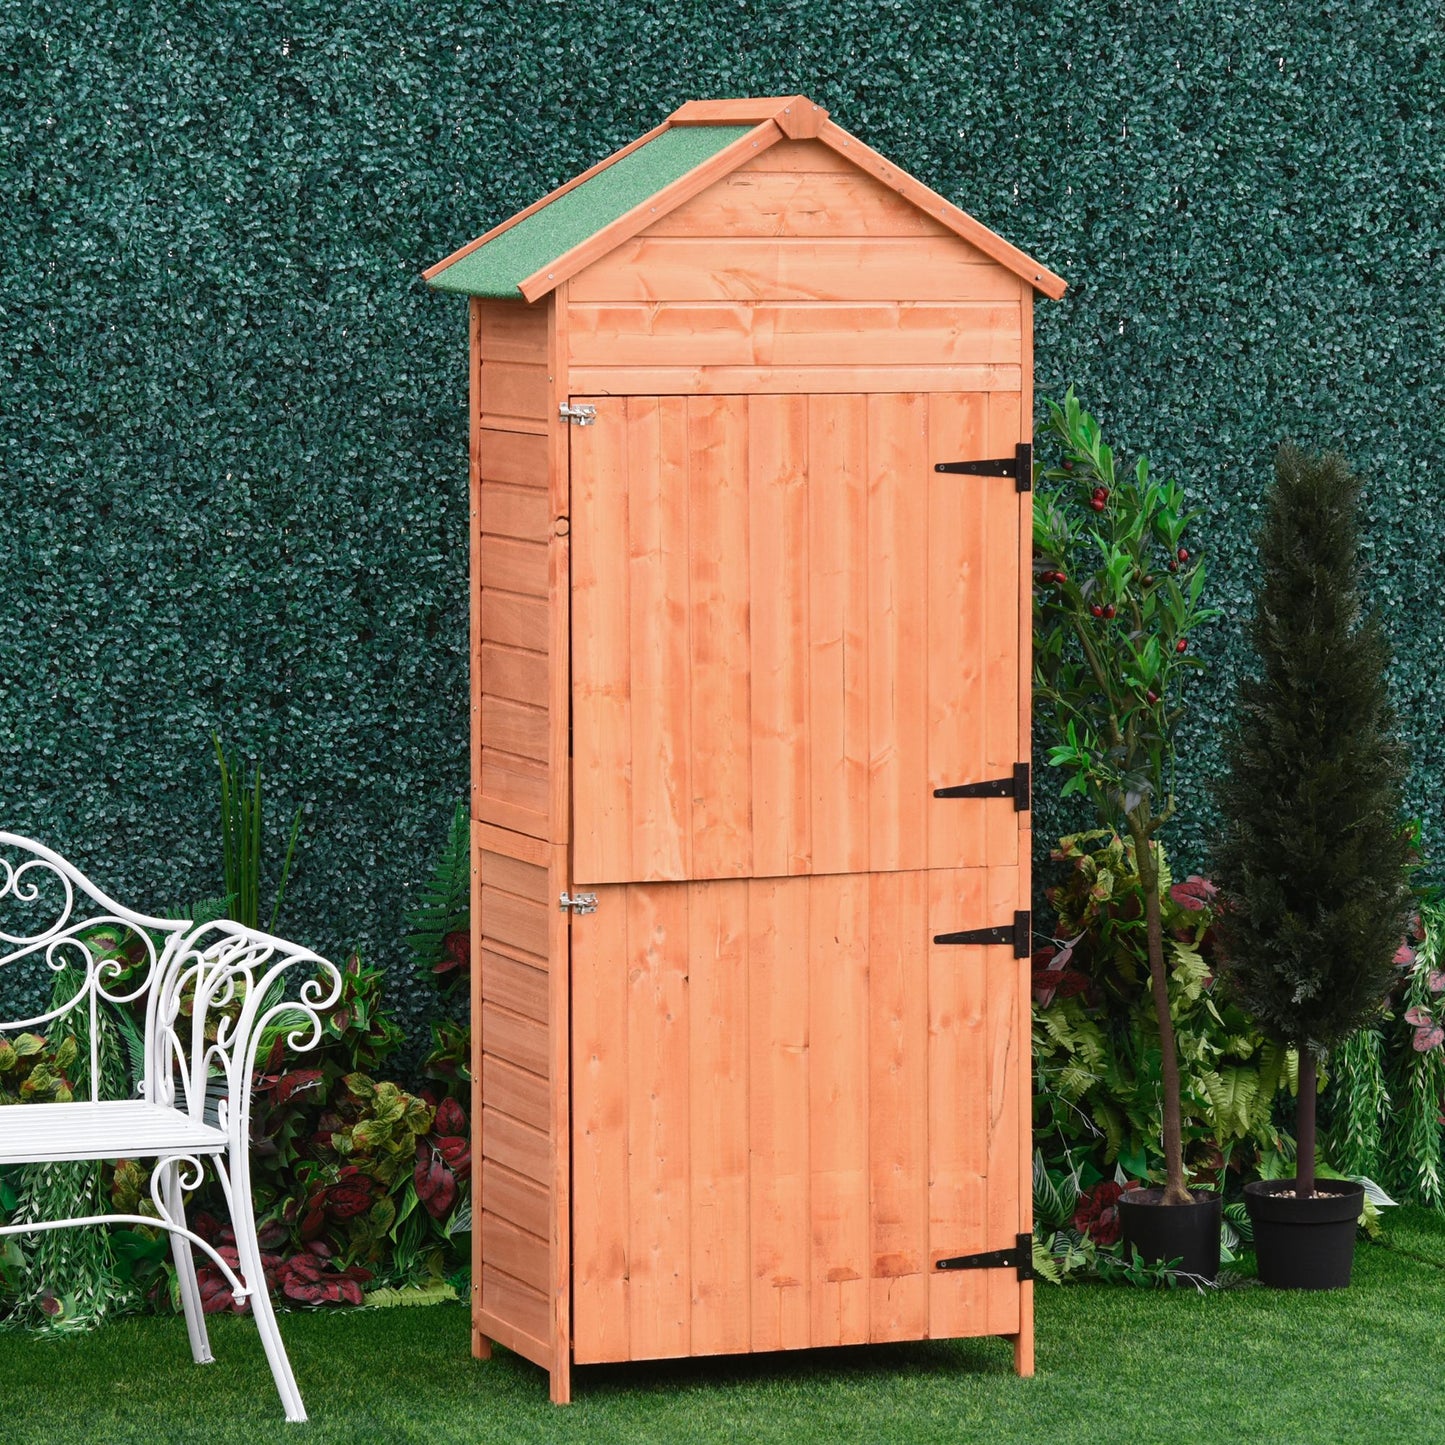 Outsunny 84 x 52cm Garden Shed 4-Tier Wooden Garden Outdoor Shed 3 Shelves - Teak